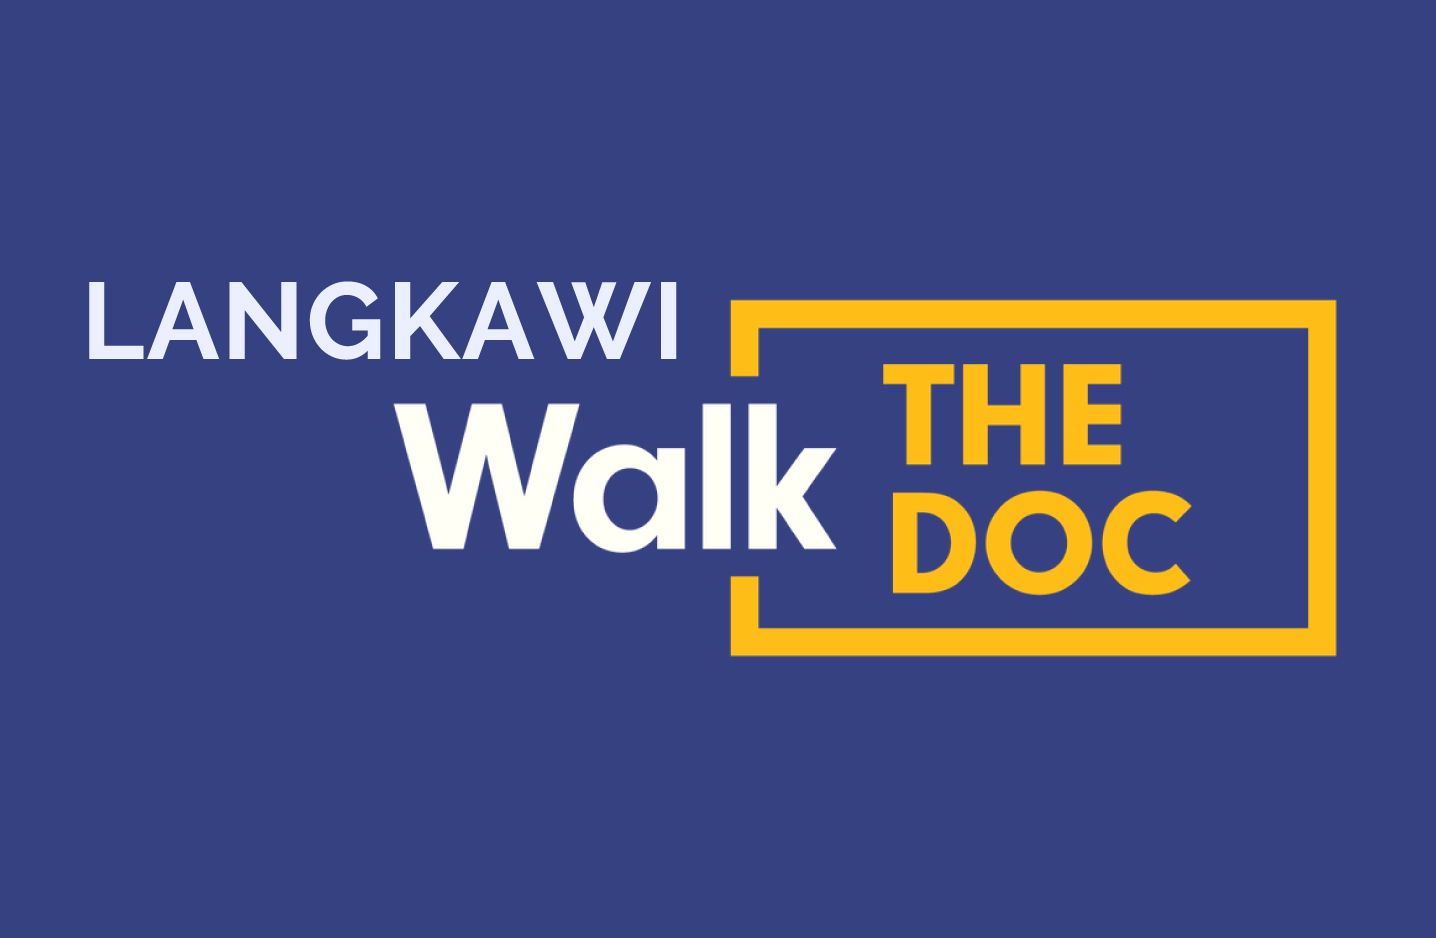 Langkawi Walk The Doc film festival